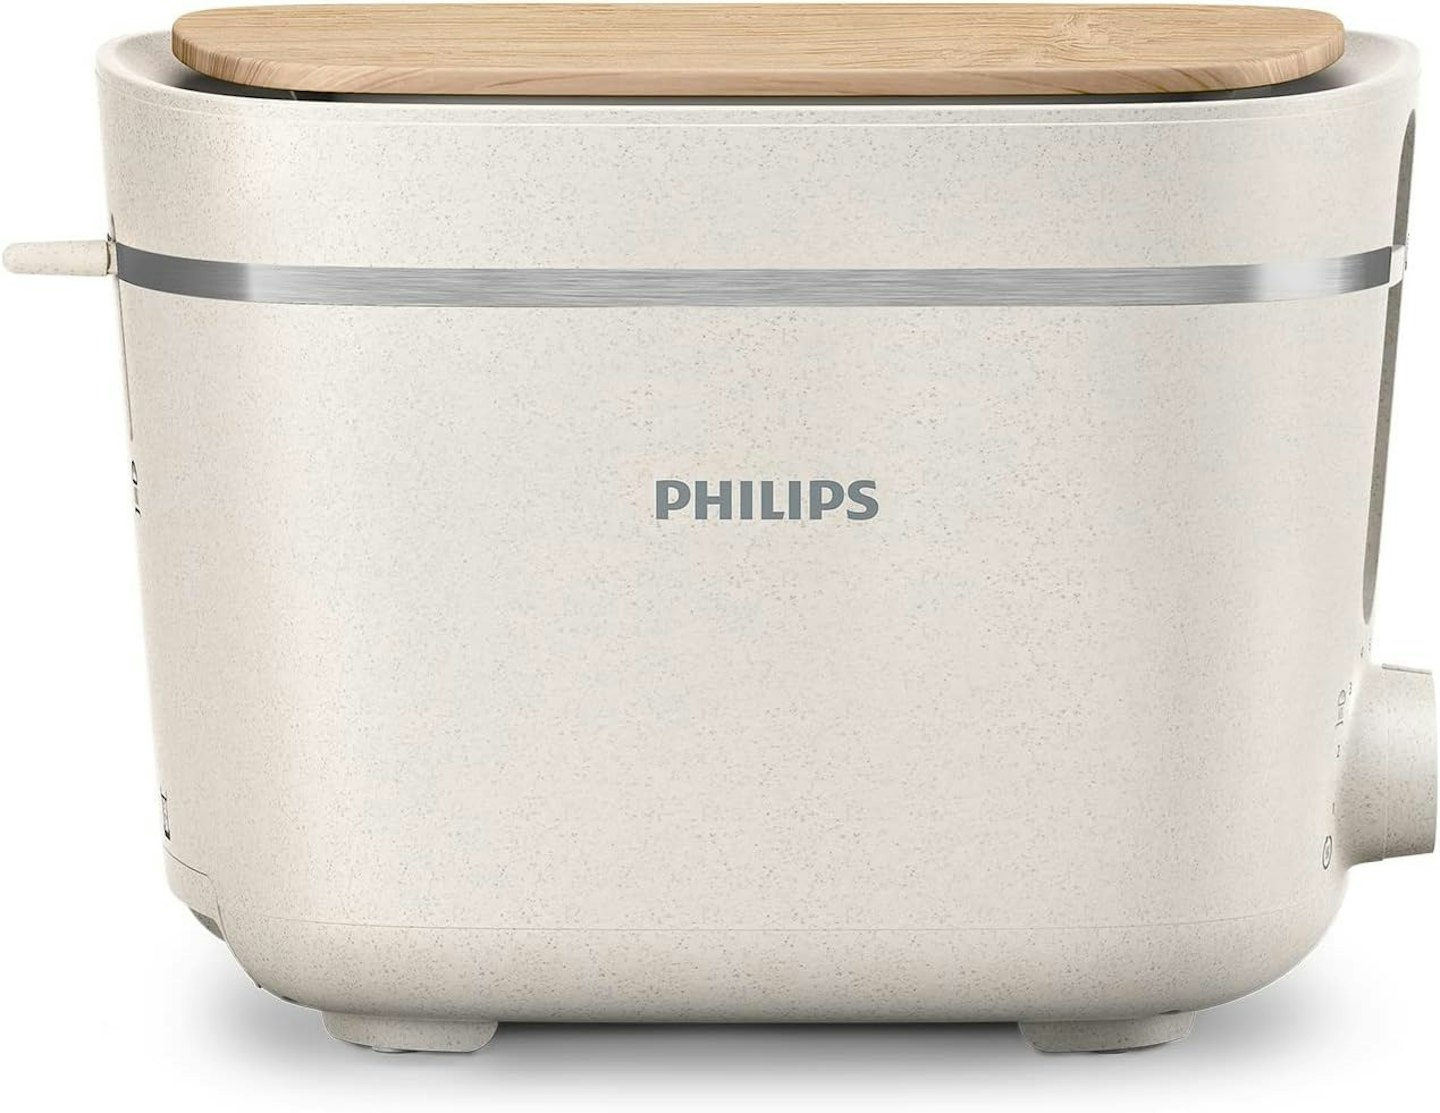 Philips - best energy efficient toaster